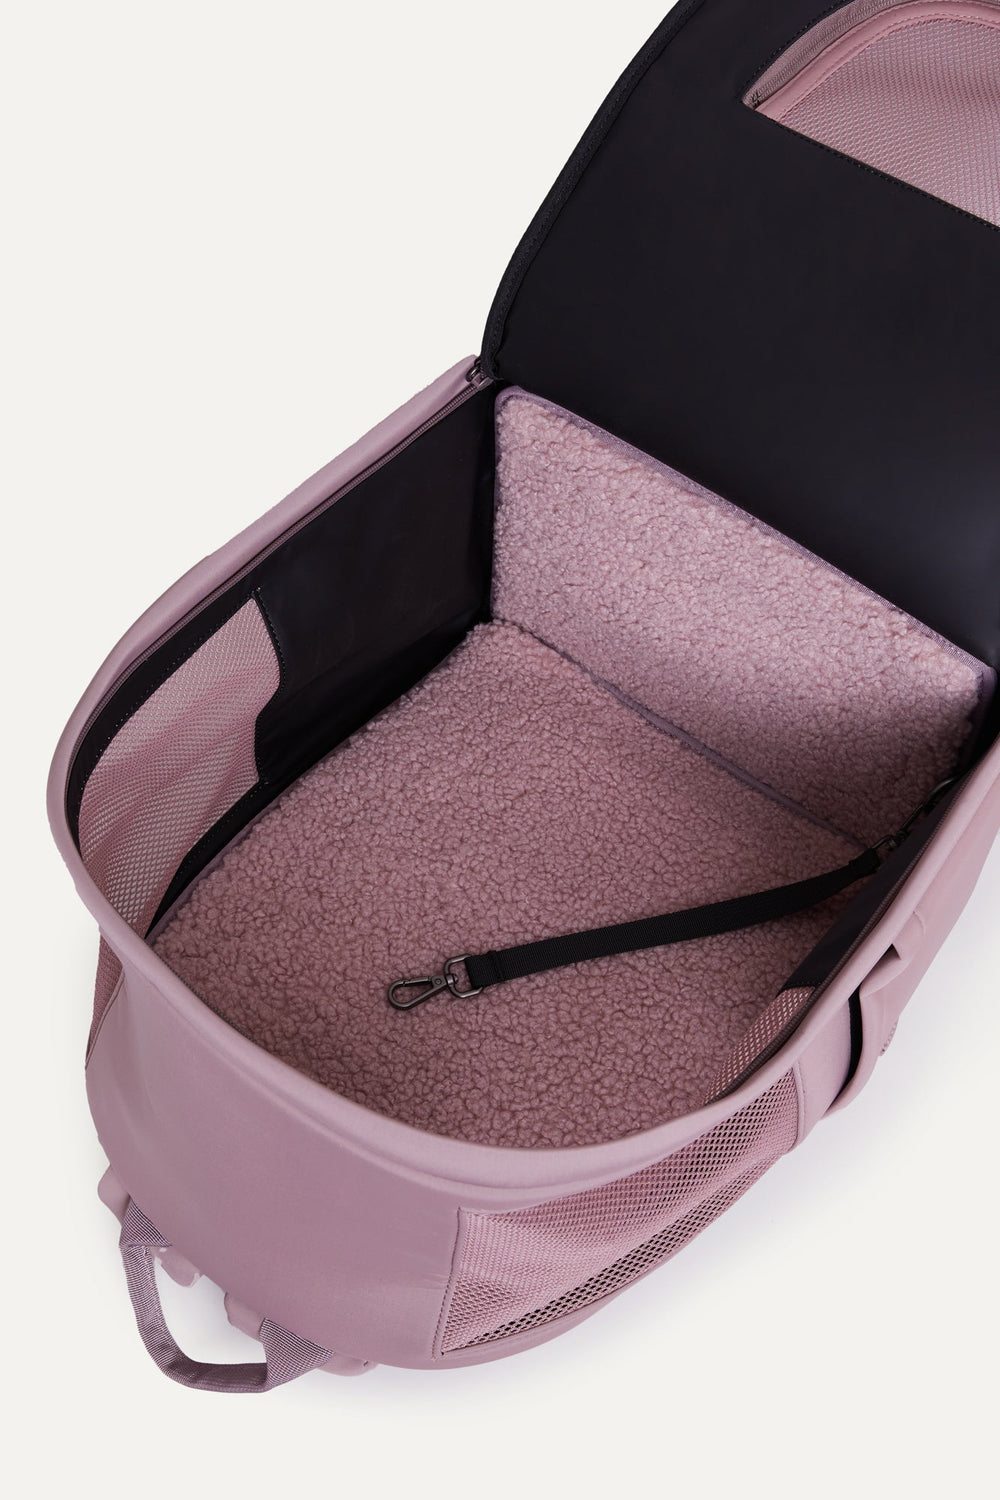 Longchamp Mini Le Pliage Backpack - Elle Blogs